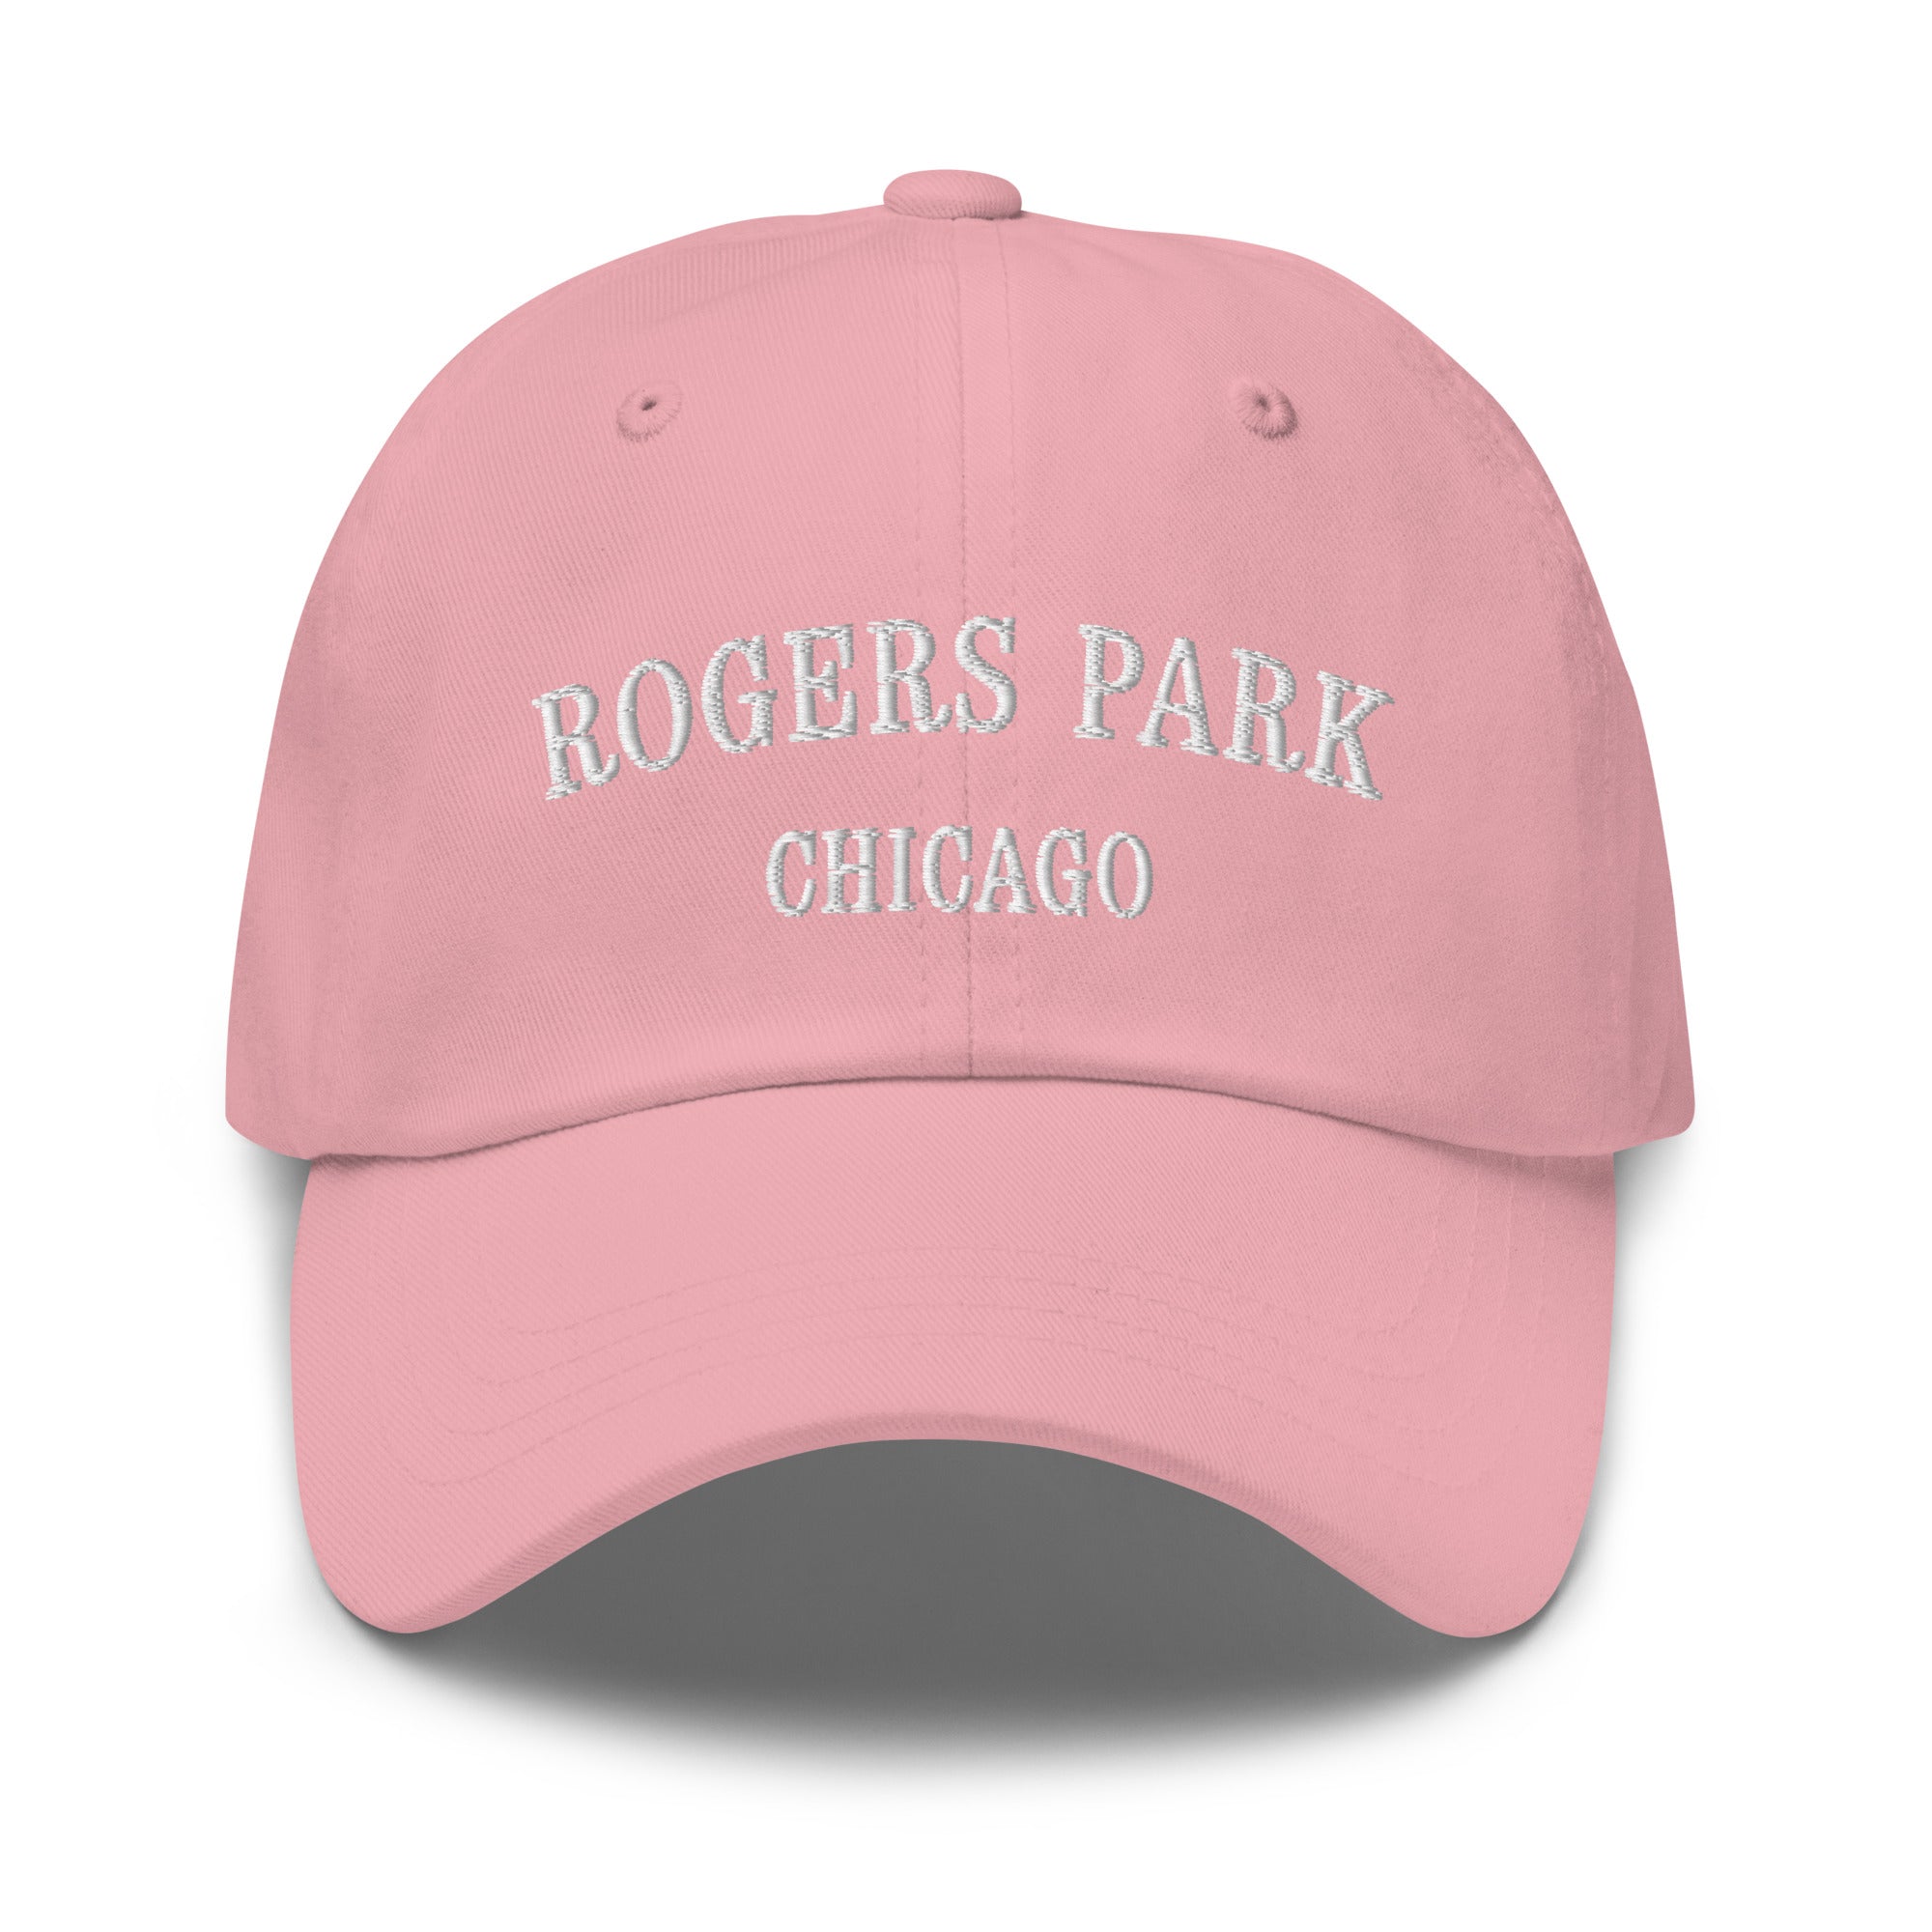 Rogers Park Chicago Dad Hat